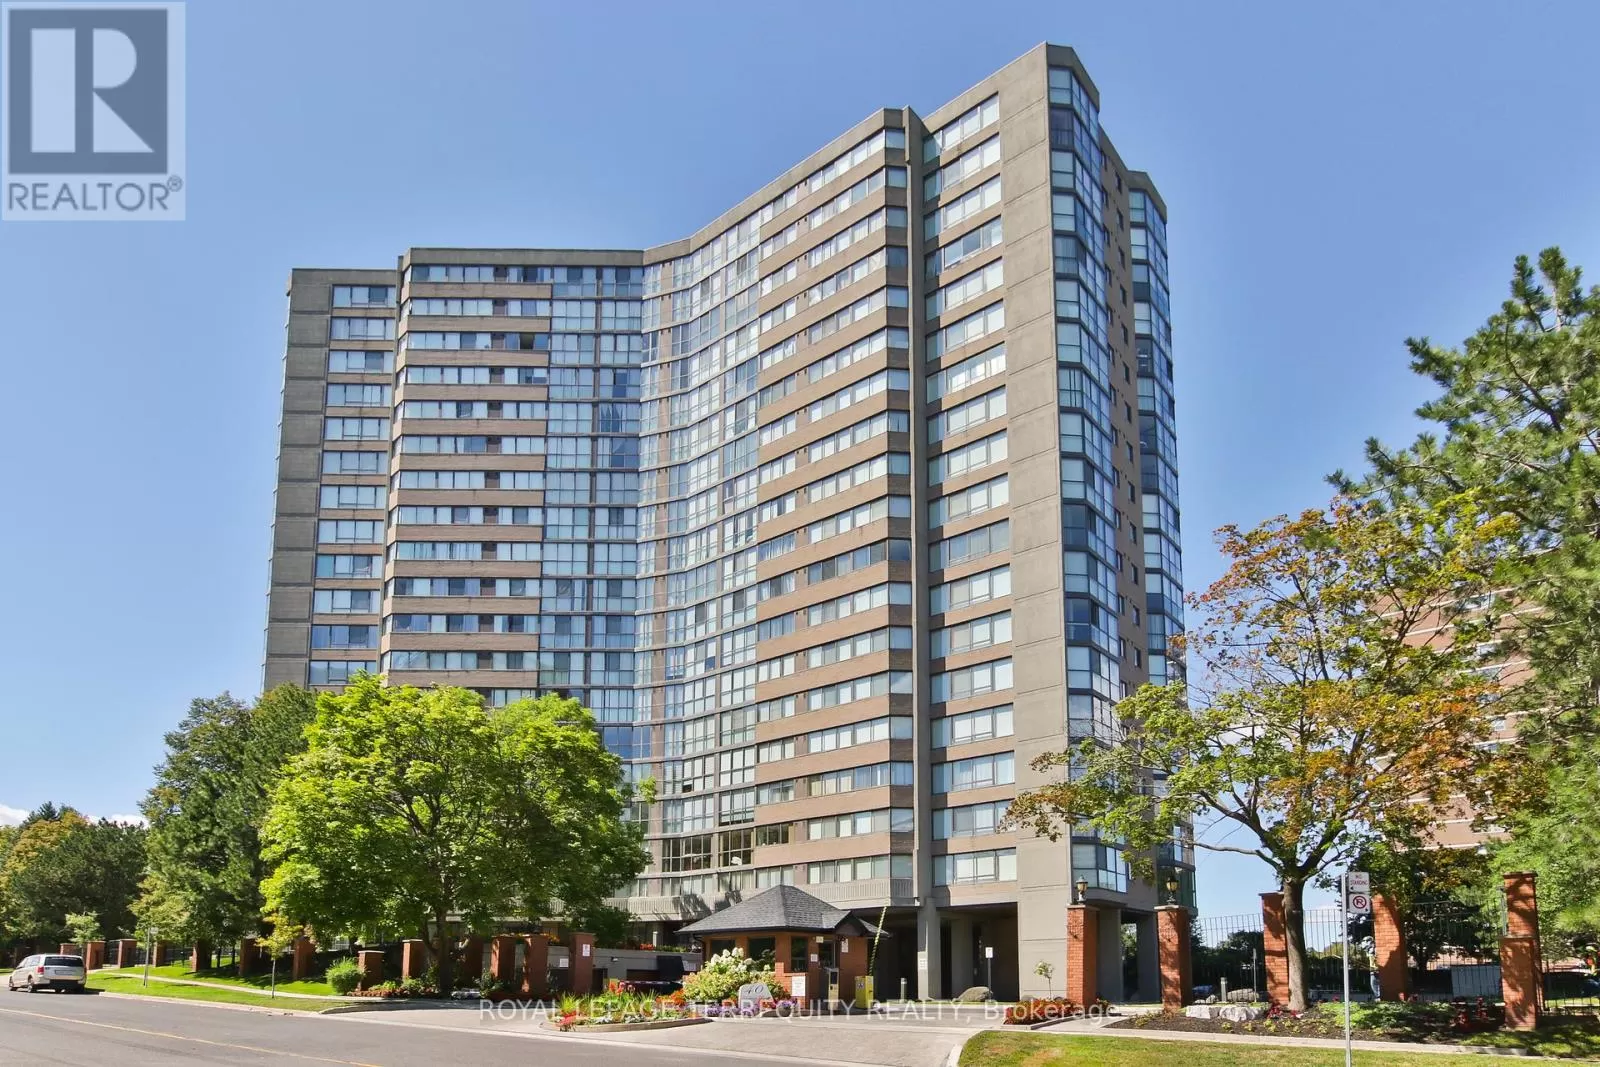 Apartment for rent: 802 - 40 Richview Road, Toronto, Ontario M9A 5C1